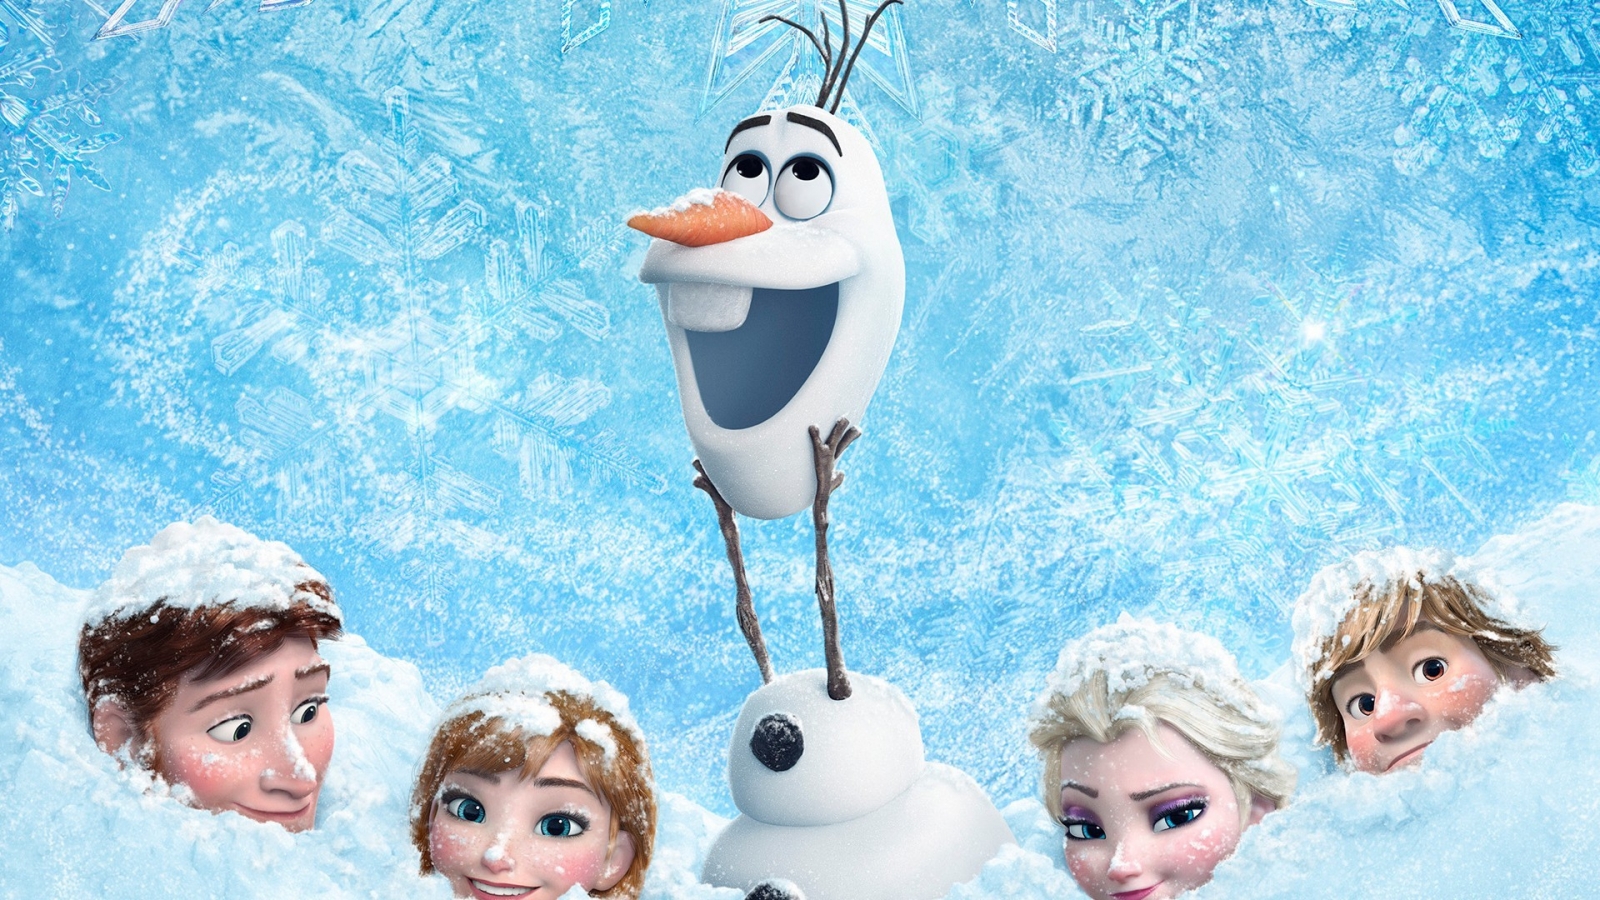 Frozen Animation for 1600 x 900 HDTV resolution